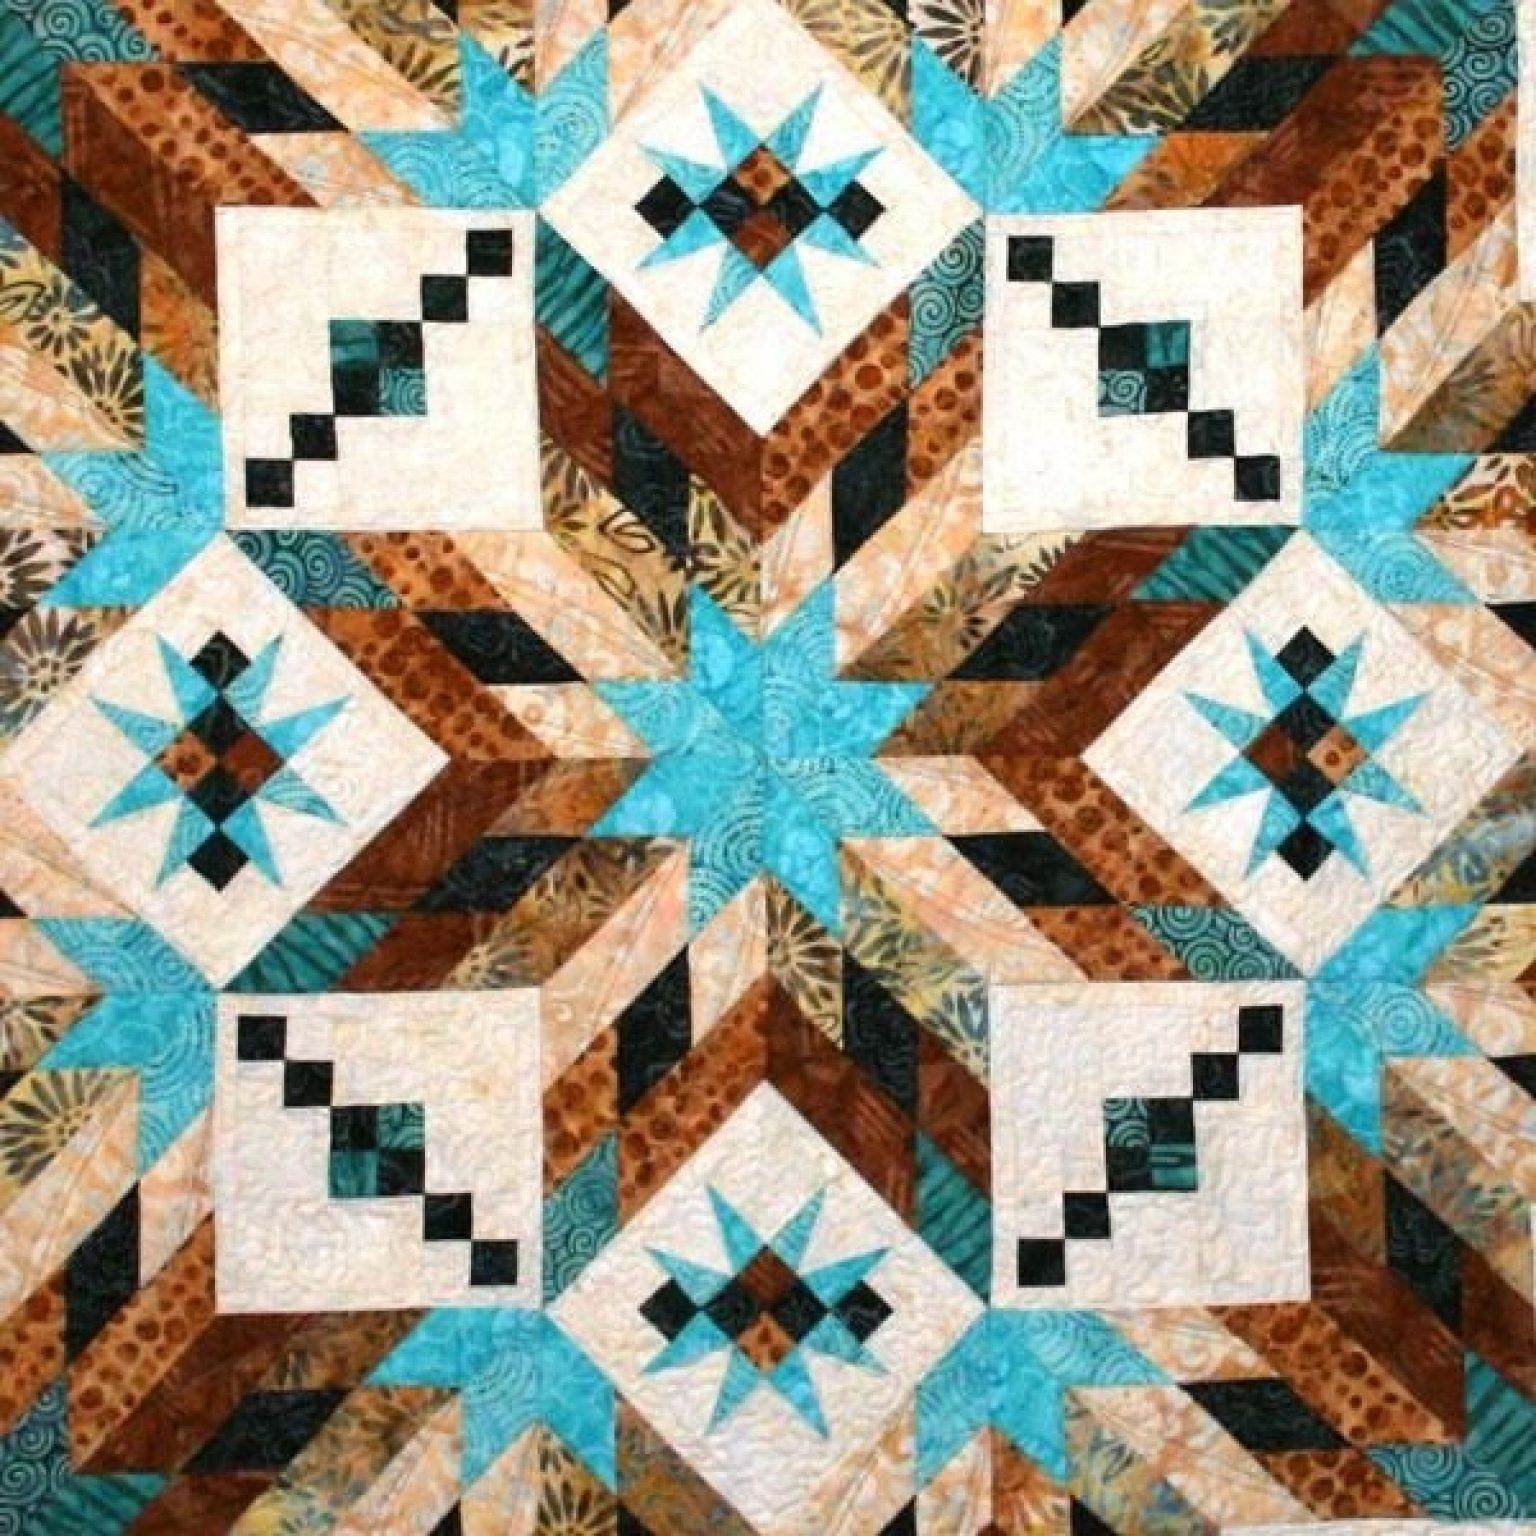 Taos Bom November 2020 Native American Quilt Patterns 11 Quilting Ideas